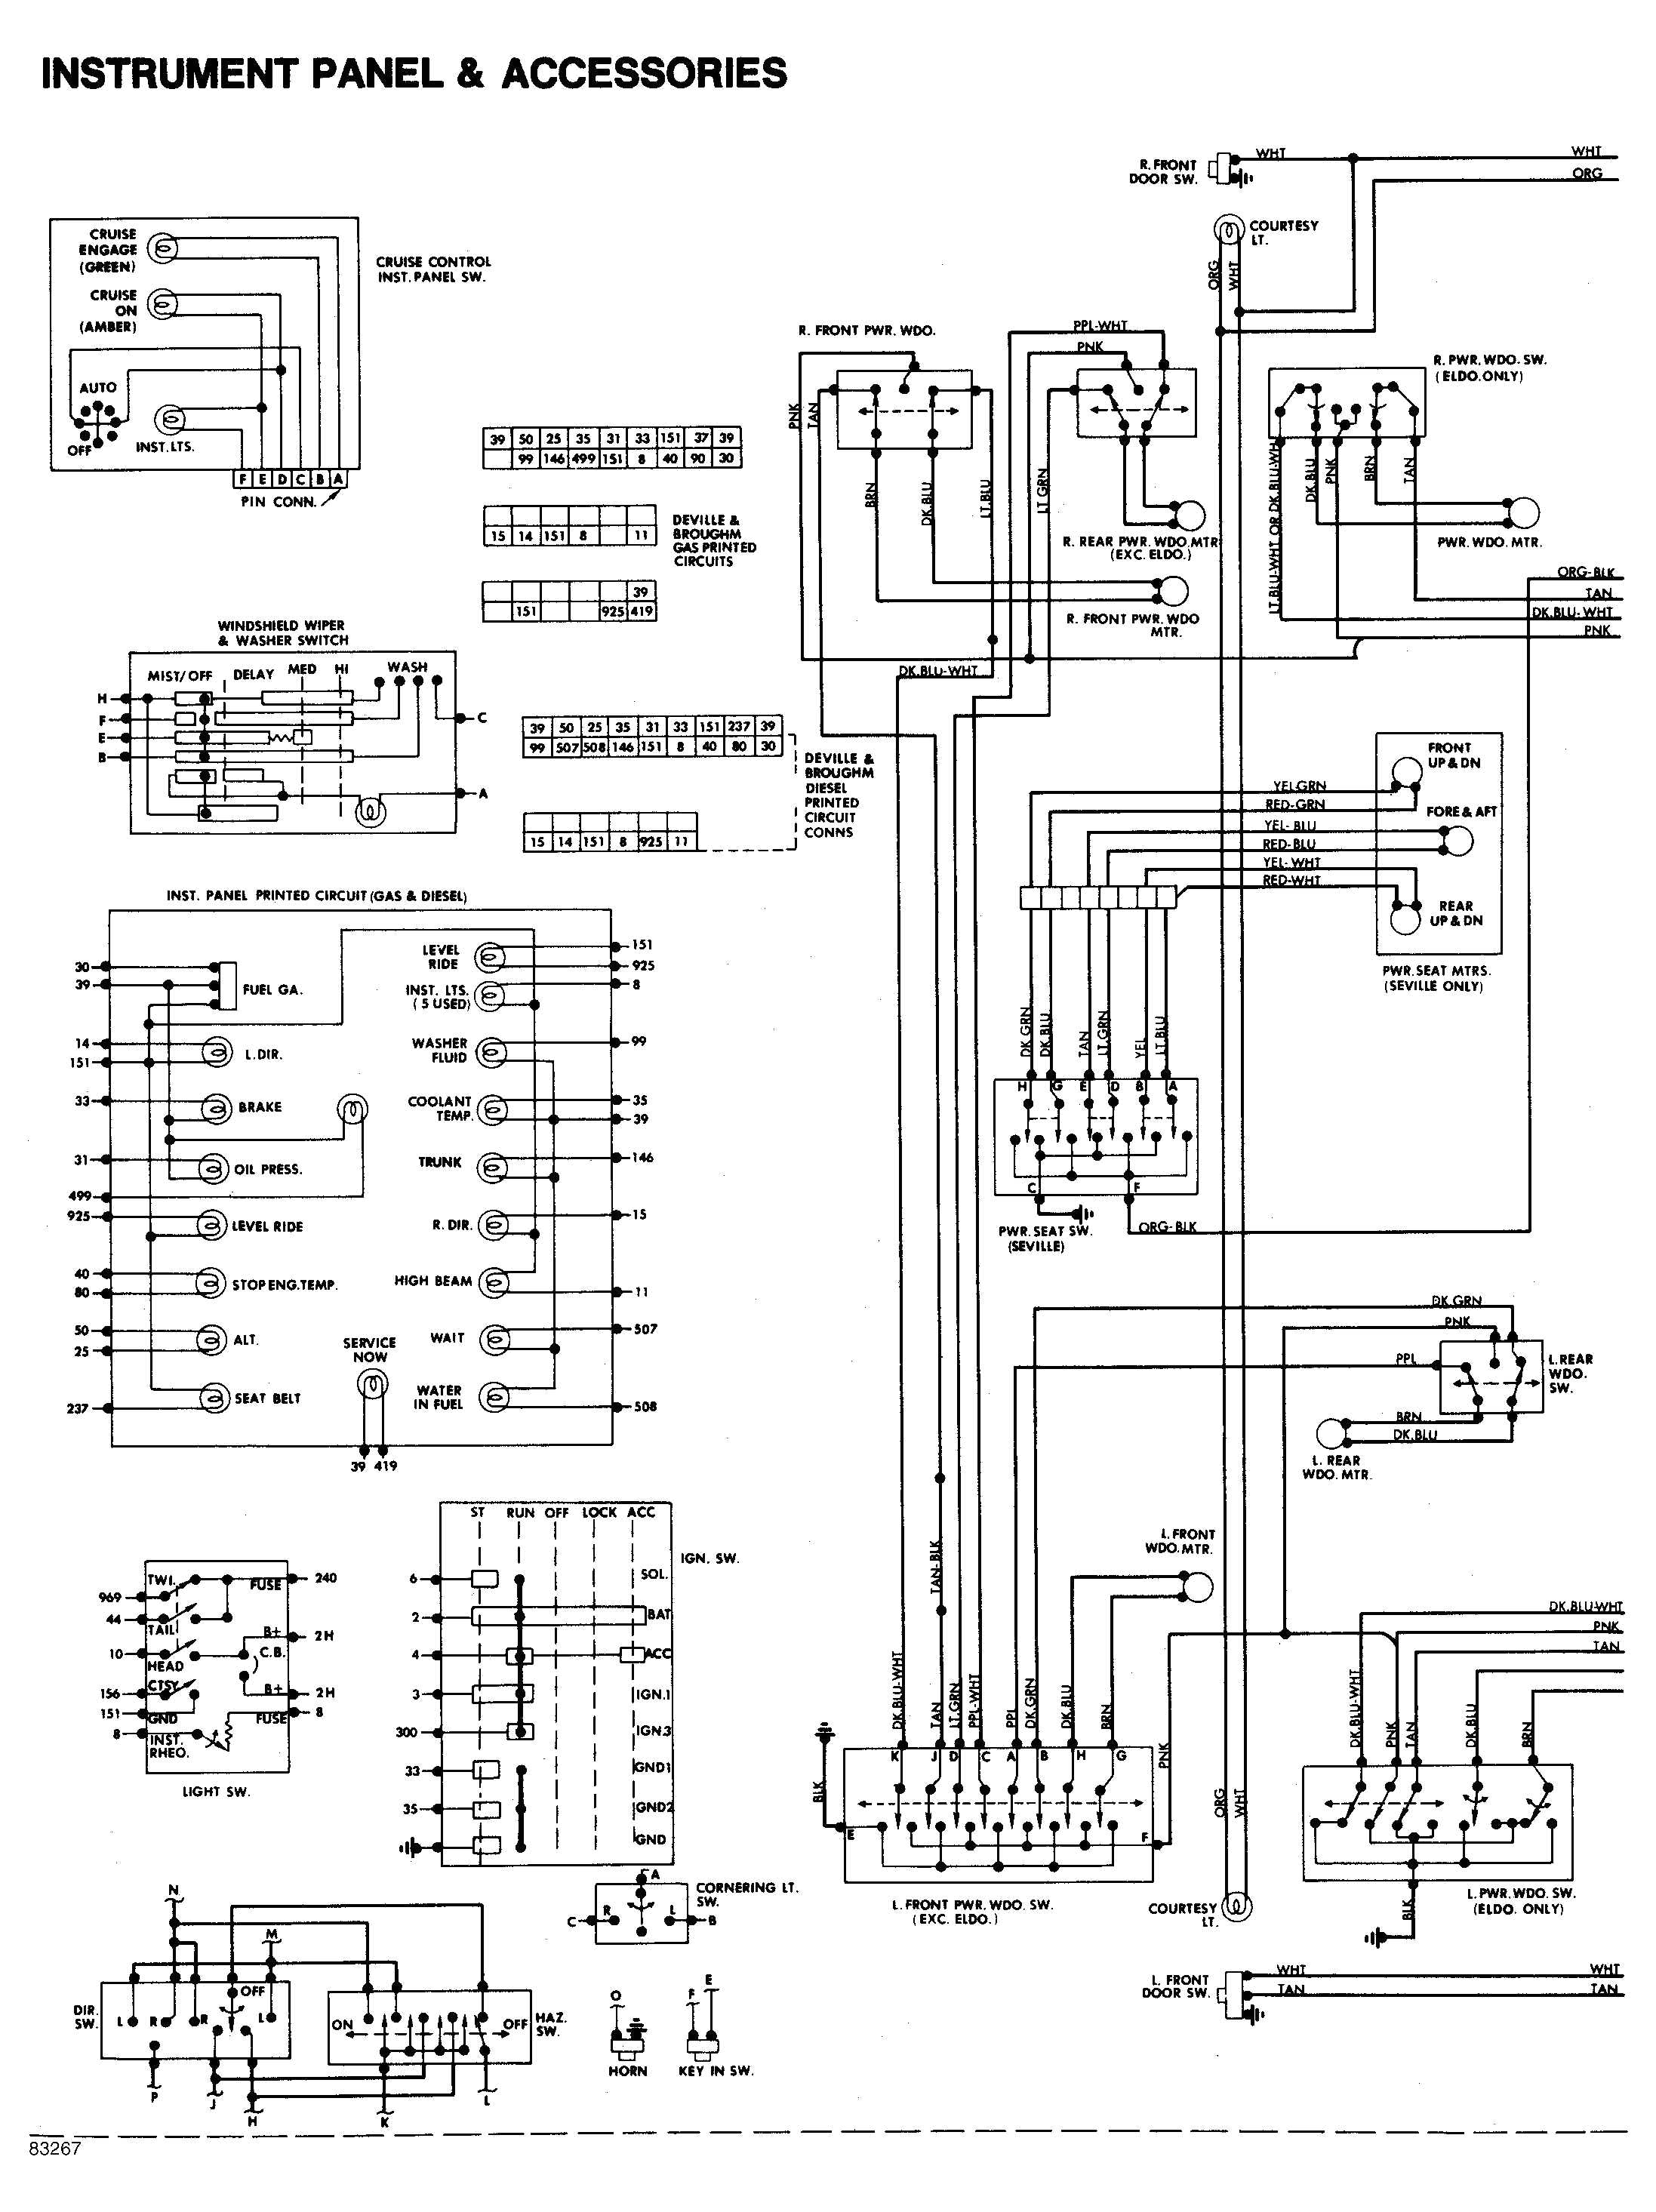 boss car stereo wiring diagram wiring diagram database stereo wiring diagram 87 subaru gl